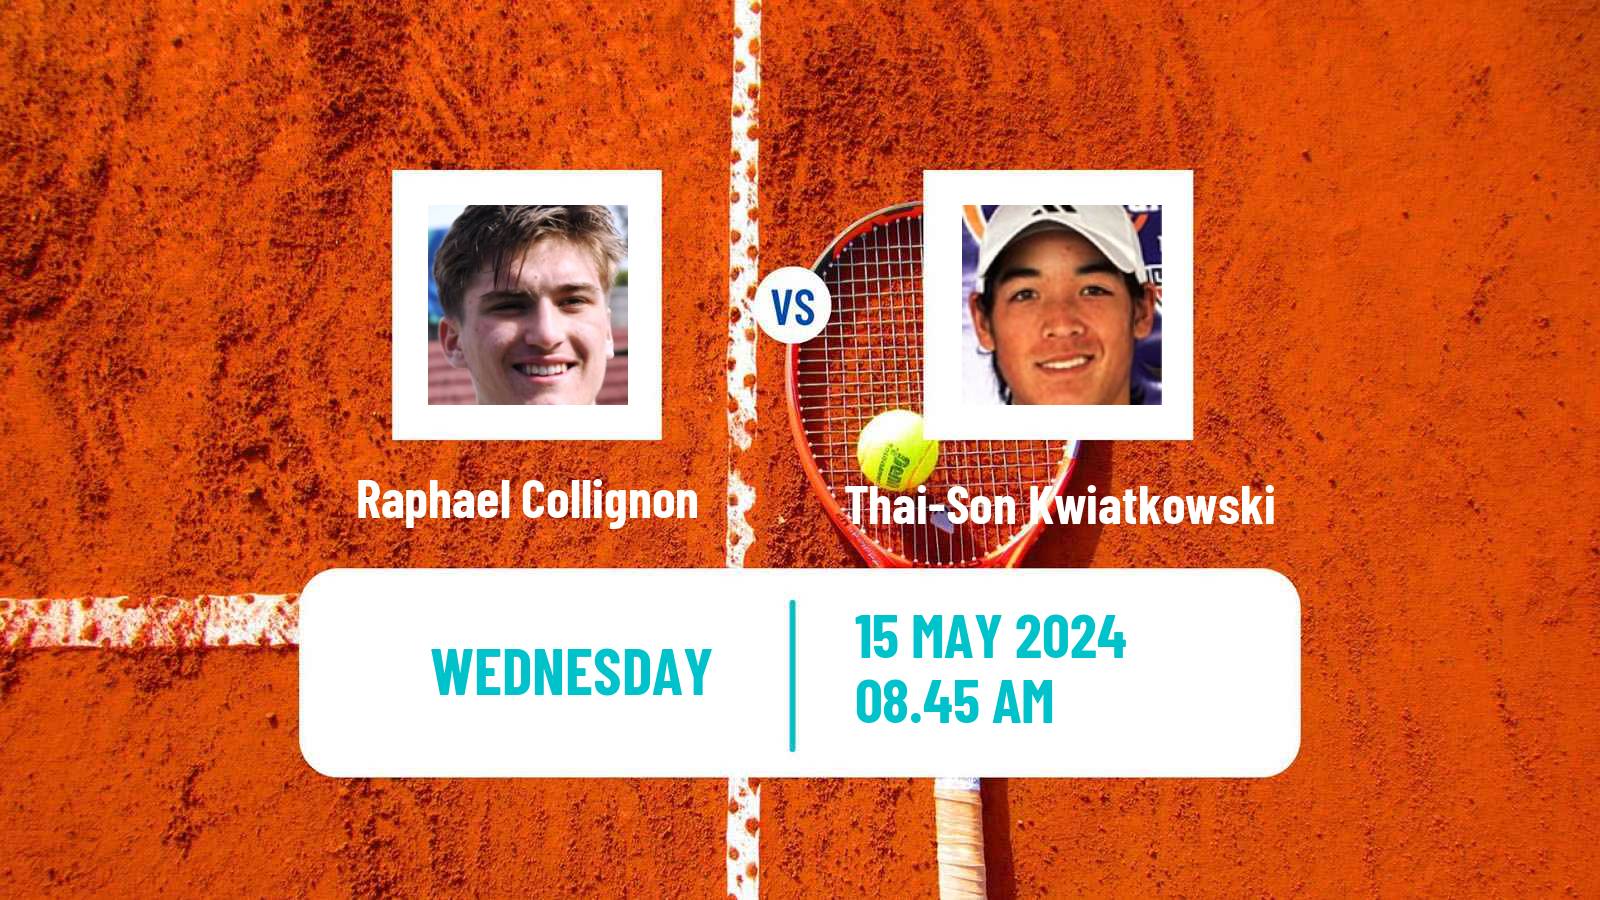 Tennis ITF M25 Vic Men Raphael Collignon - Thai-Son Kwiatkowski